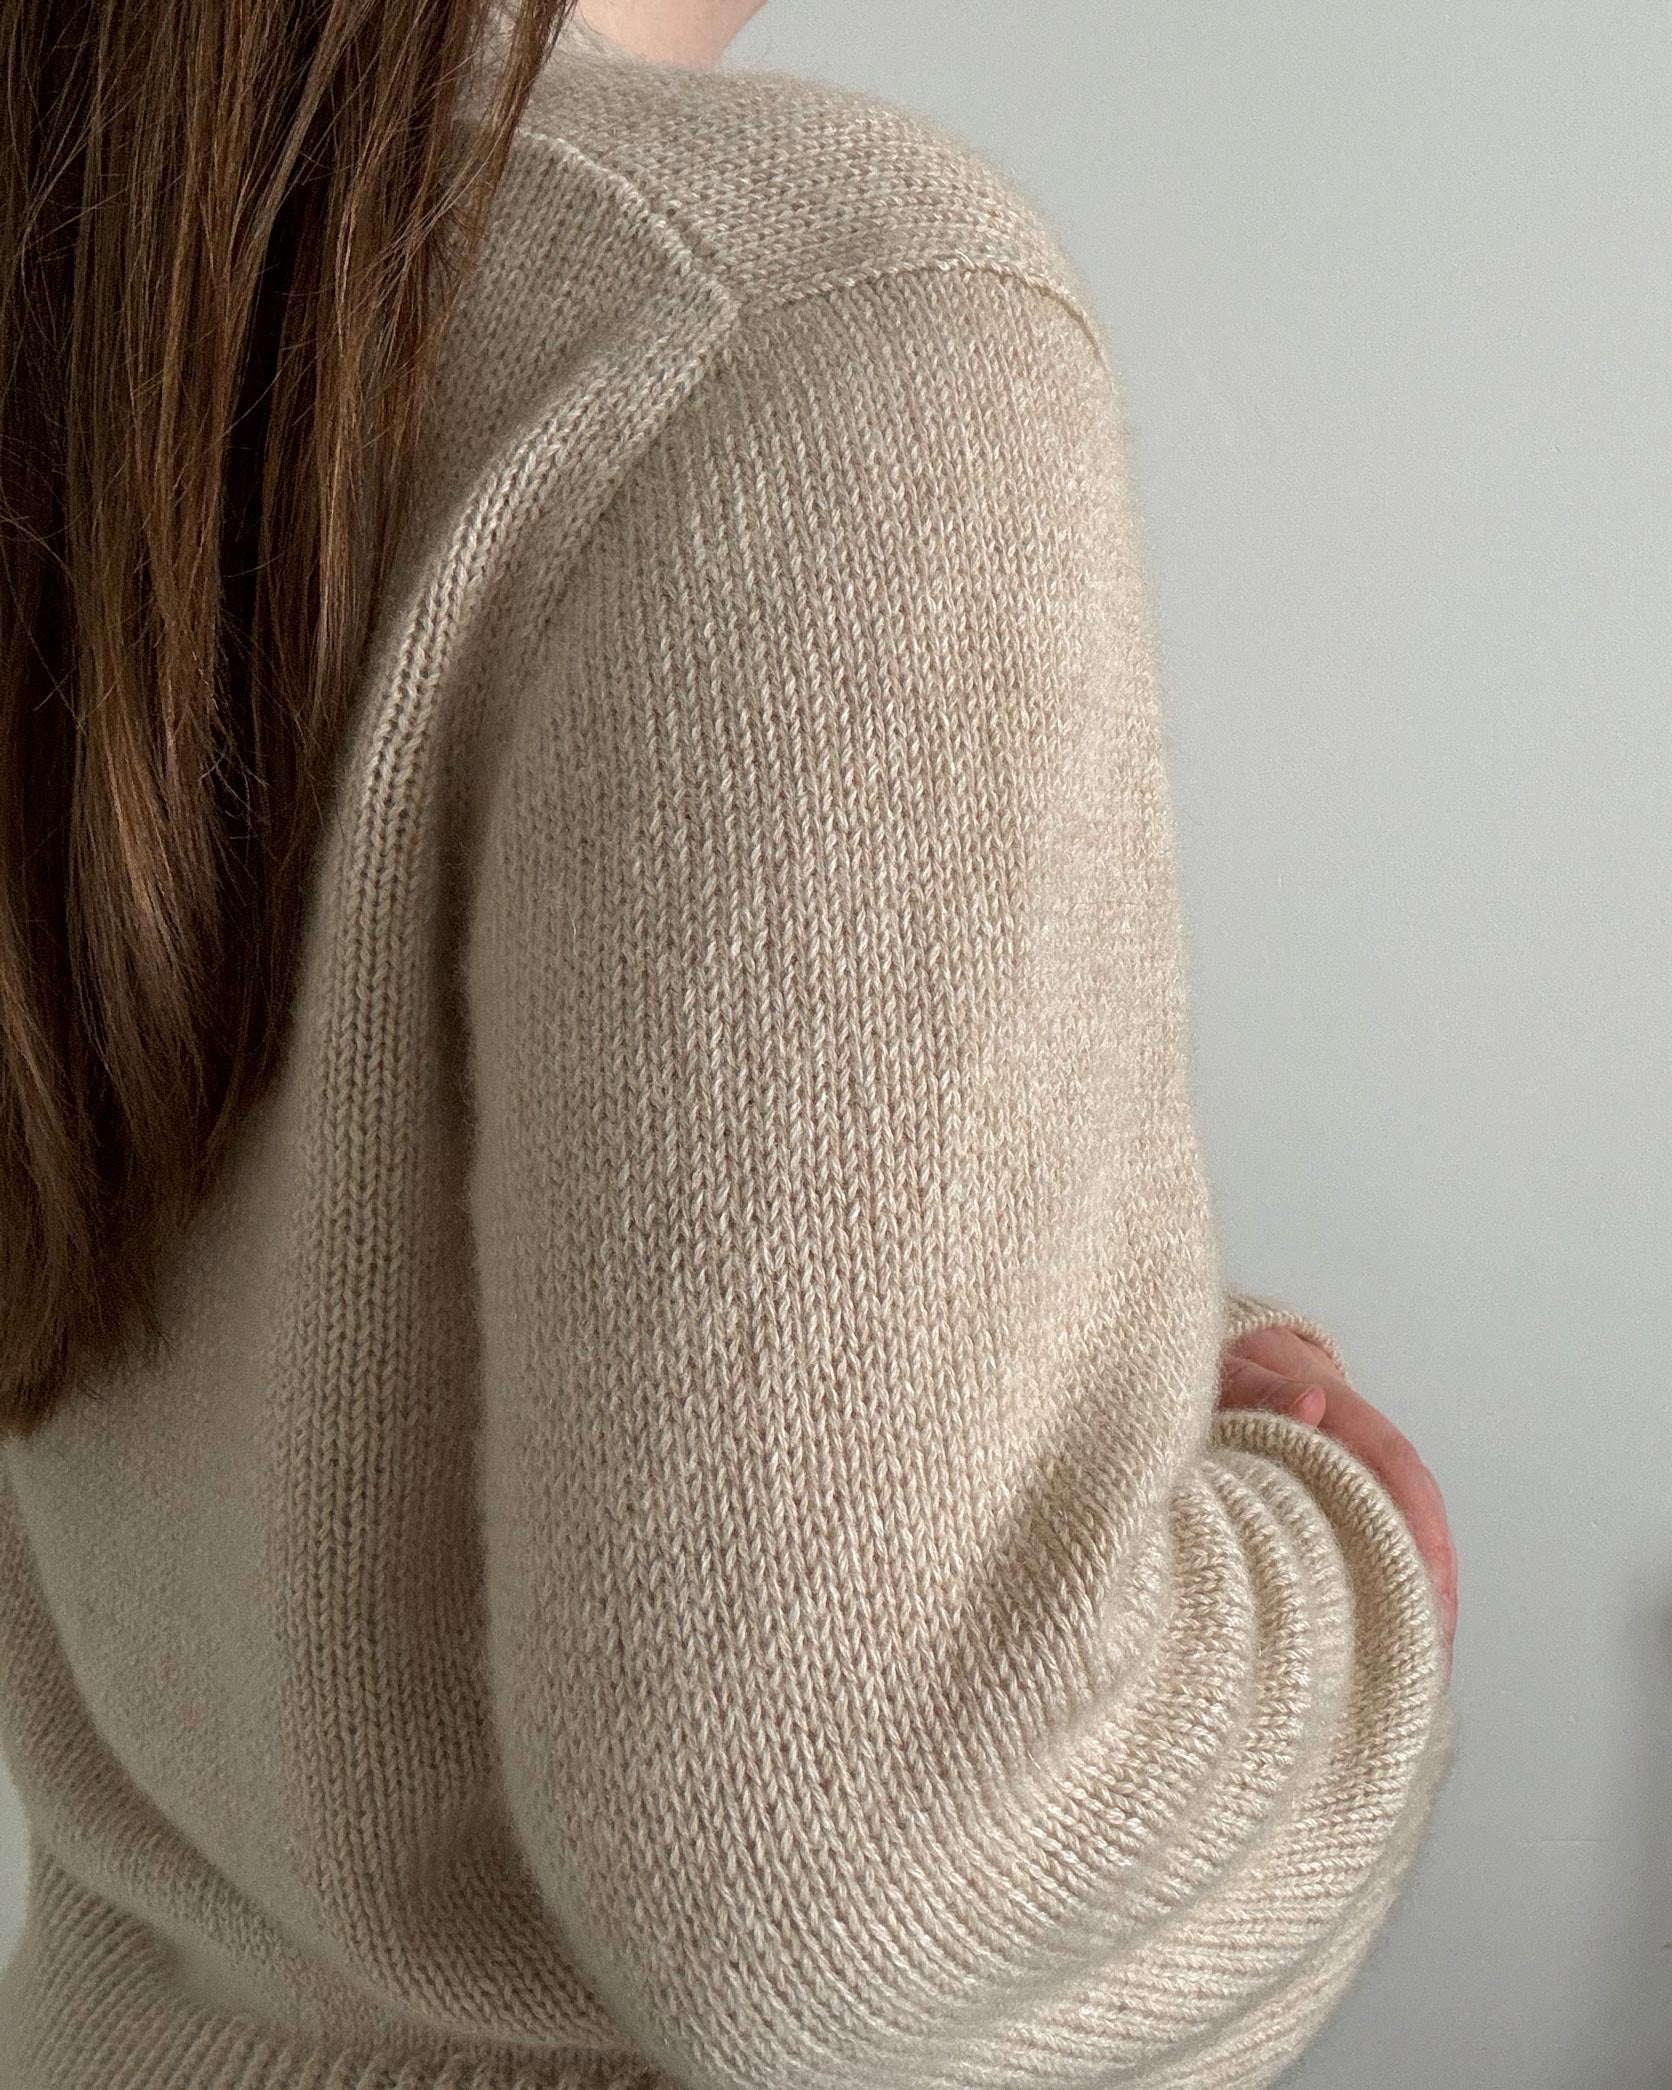 Light beige Bruno Sweater, a basic yet elegant design with Cardiff Cashemere Classic yarn.